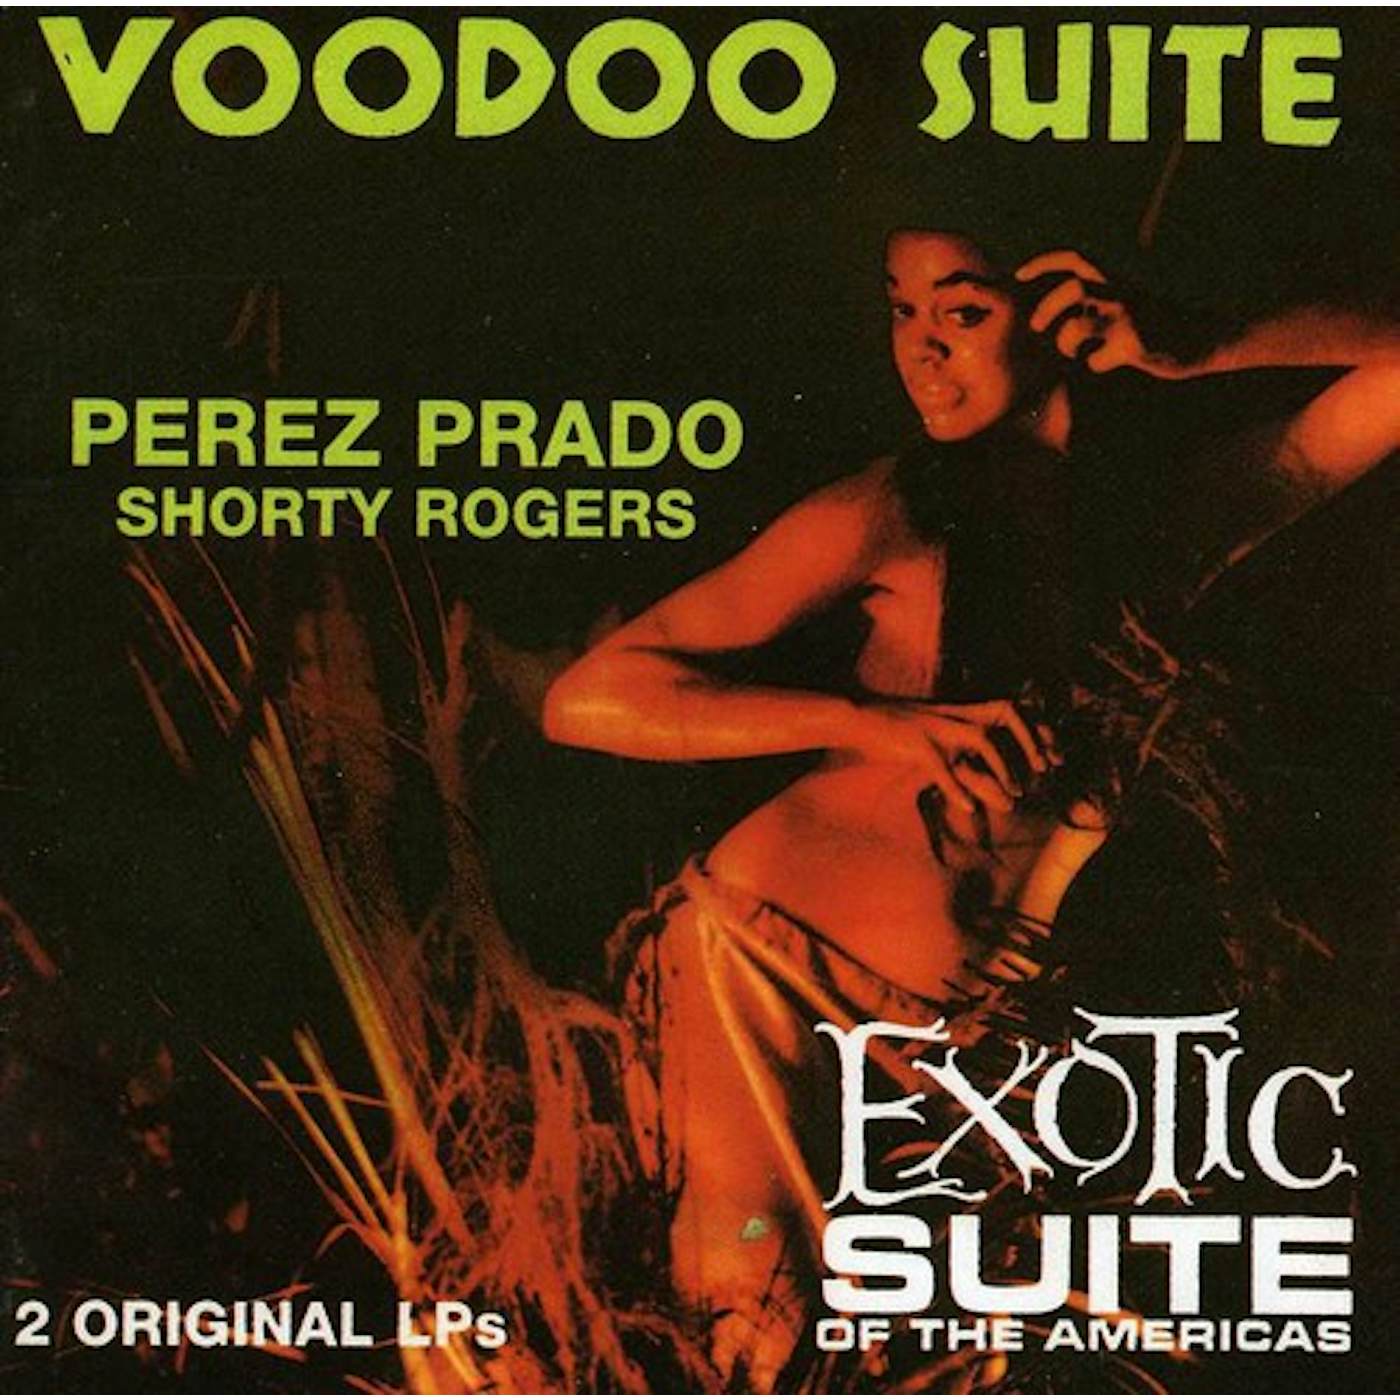 Pérez Prado VOODOO SUITE/EXOTIC SUITE CD